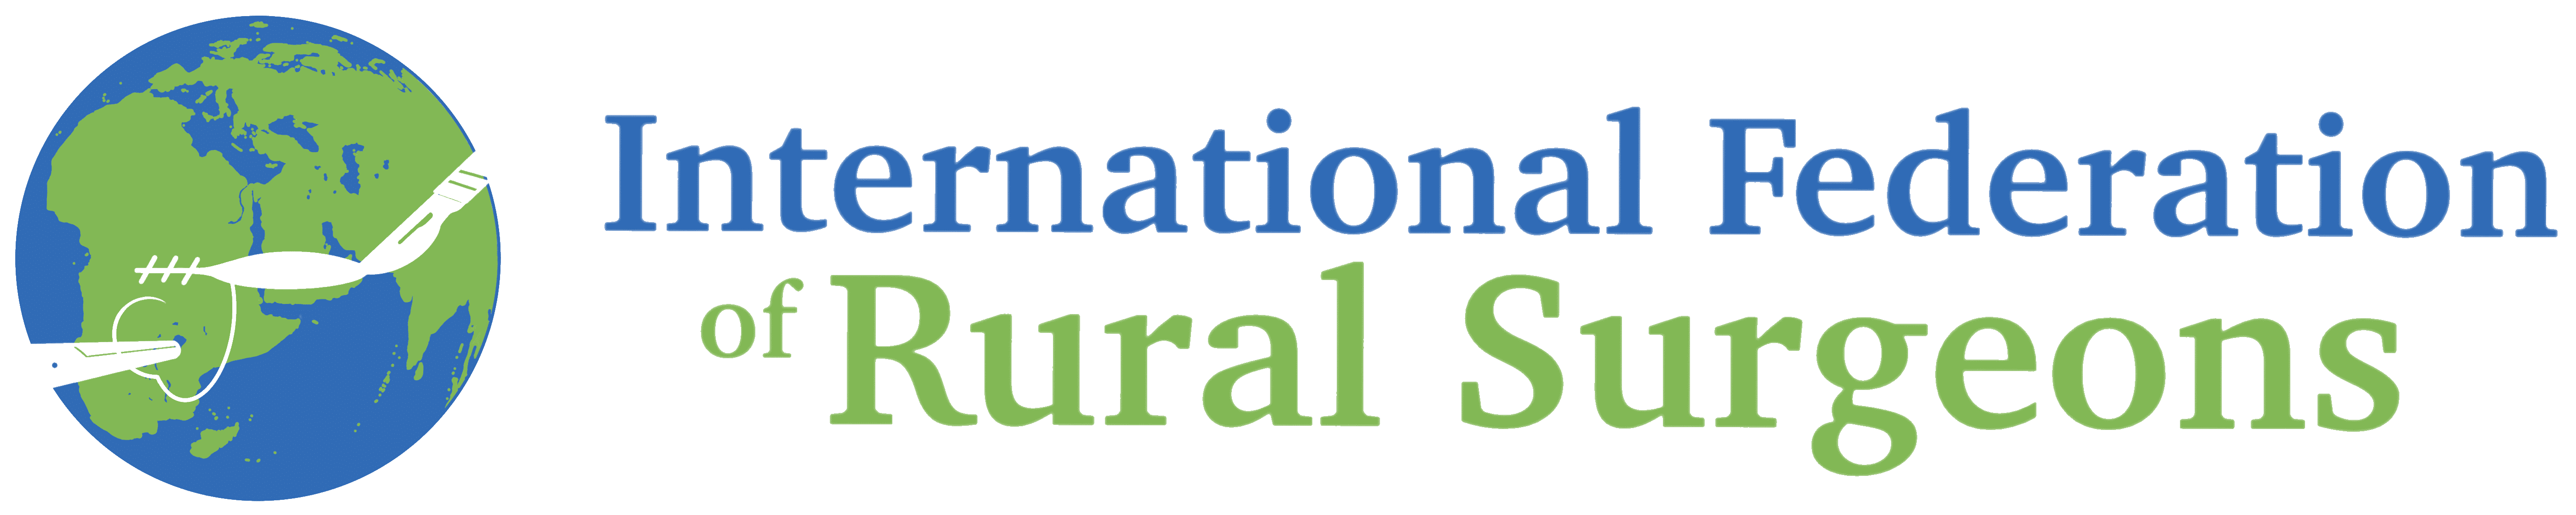 International Federation of Rural Surgeons